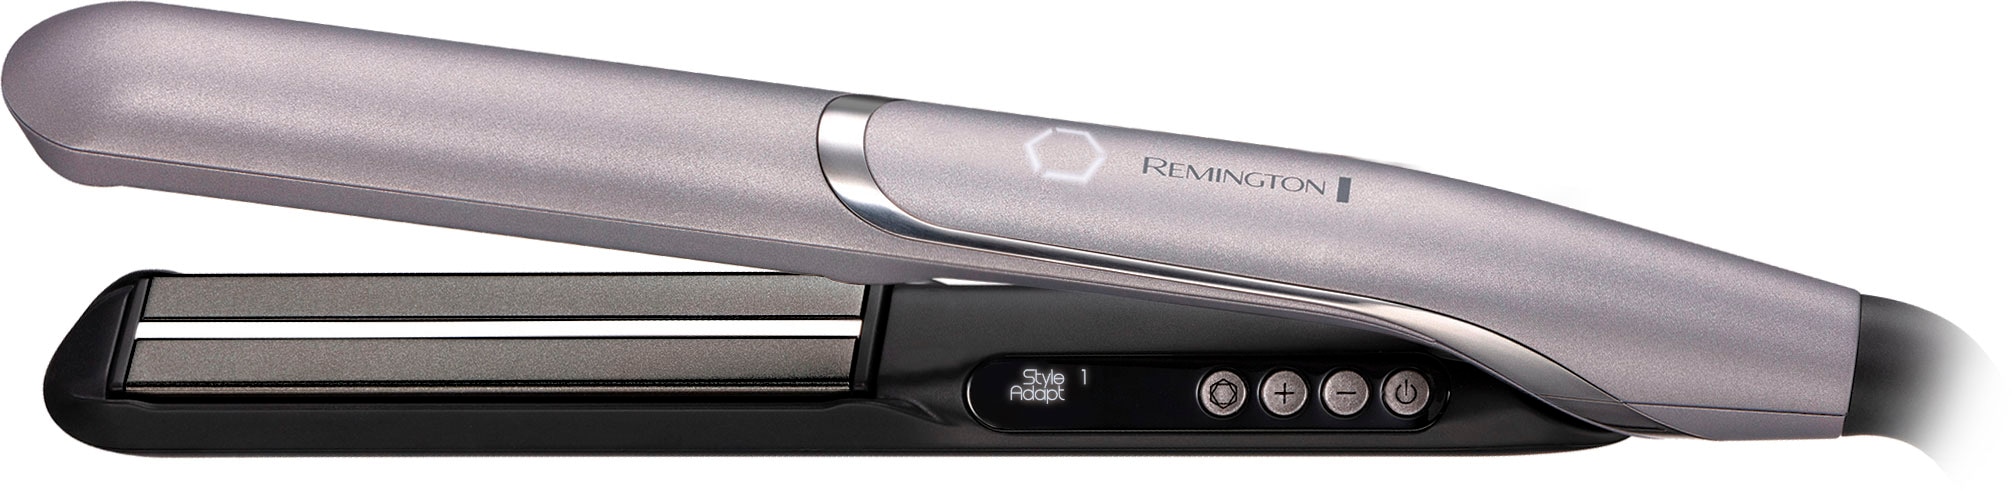 Remington Glätteisen »PROluxe You™ jetzt lernfähiger Haarglätter, 2 S9880«, Funktion, OTTO Nutzerprofile kaufen Memory Keramik-Beschichtung, bei StyleAdapt™